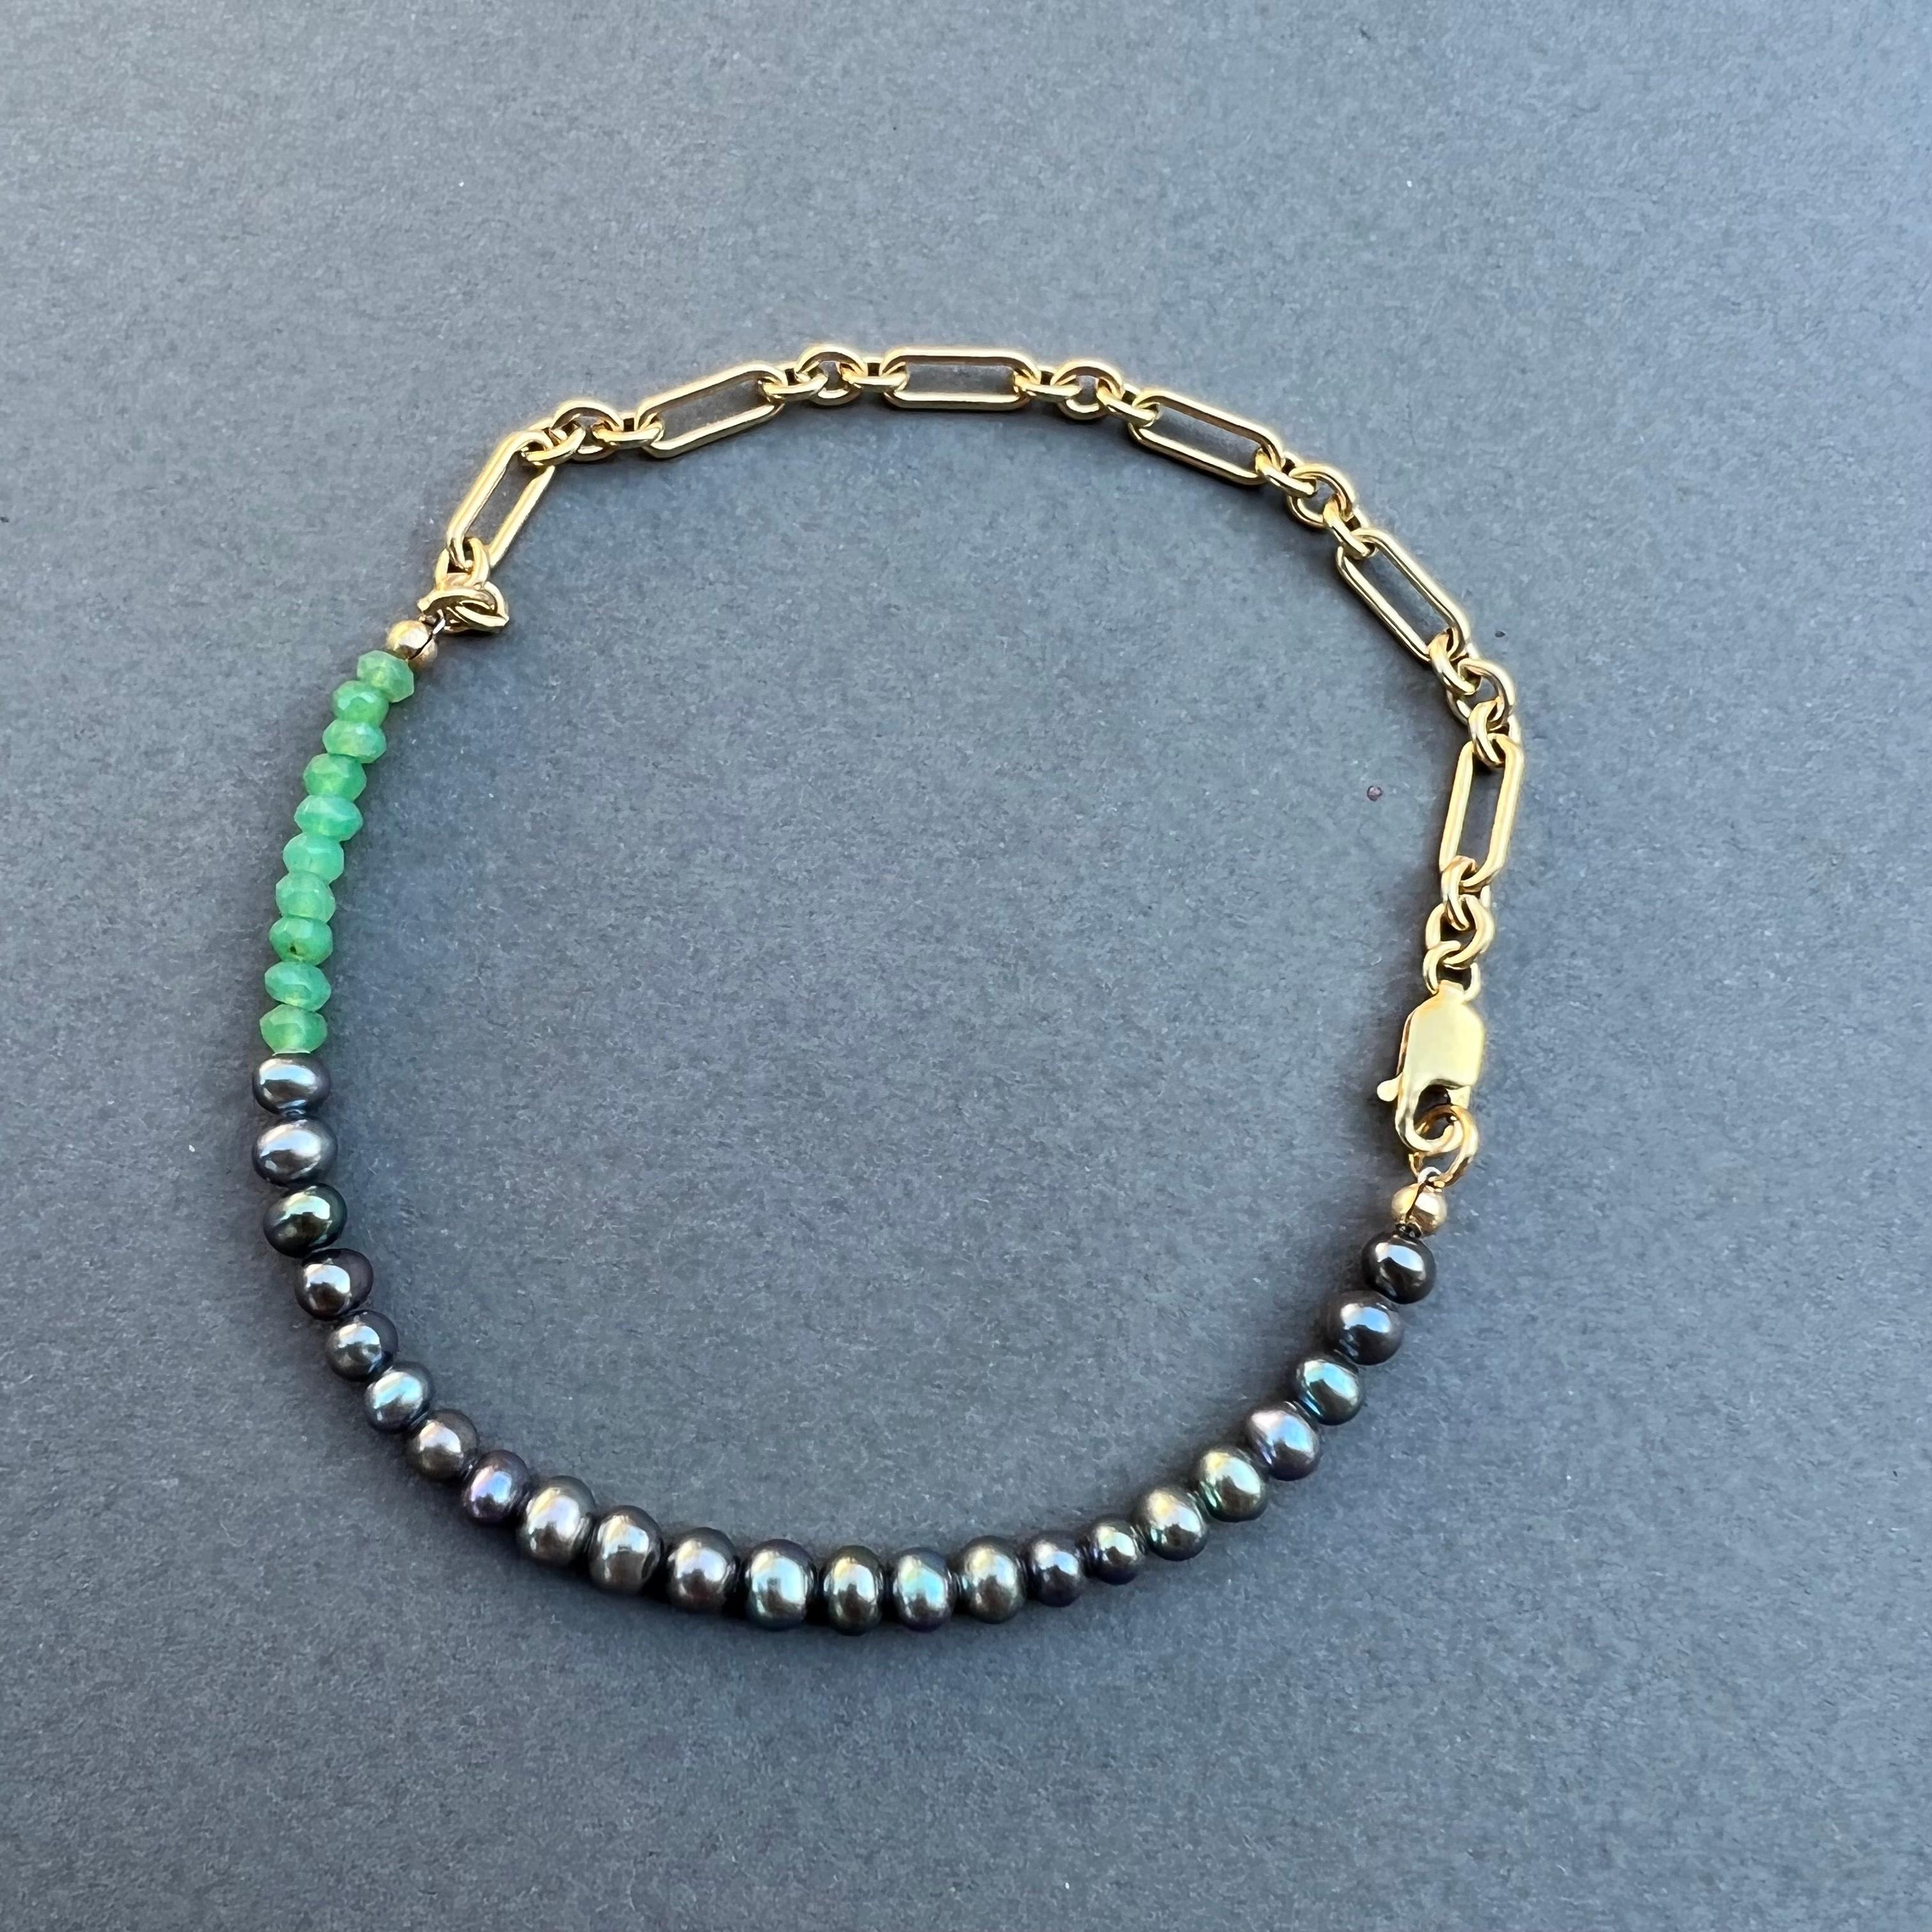 Black Pearl Bracelet Chain Chrysoprase J Dauphin
Gold-filled Chain

